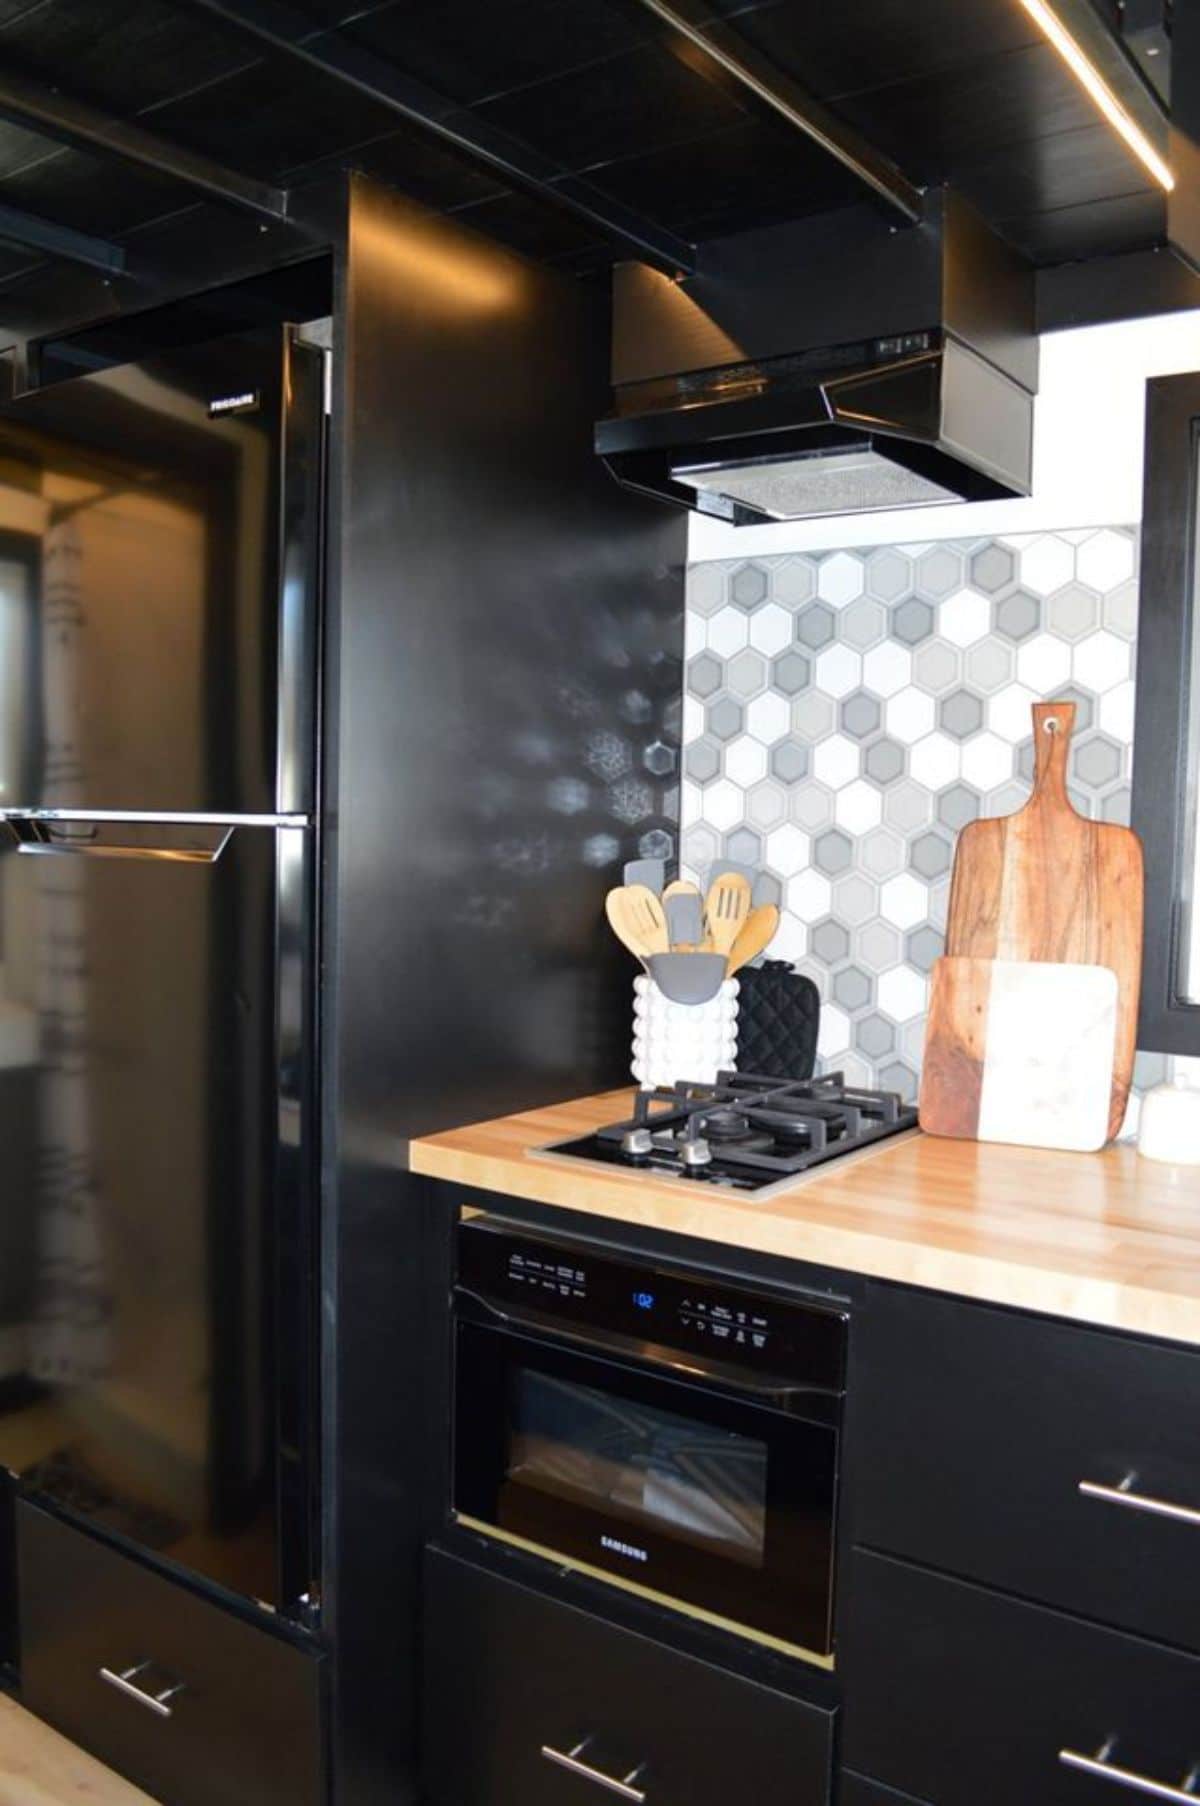 black refrigerator against the kitchen counter with round tiled backsplash